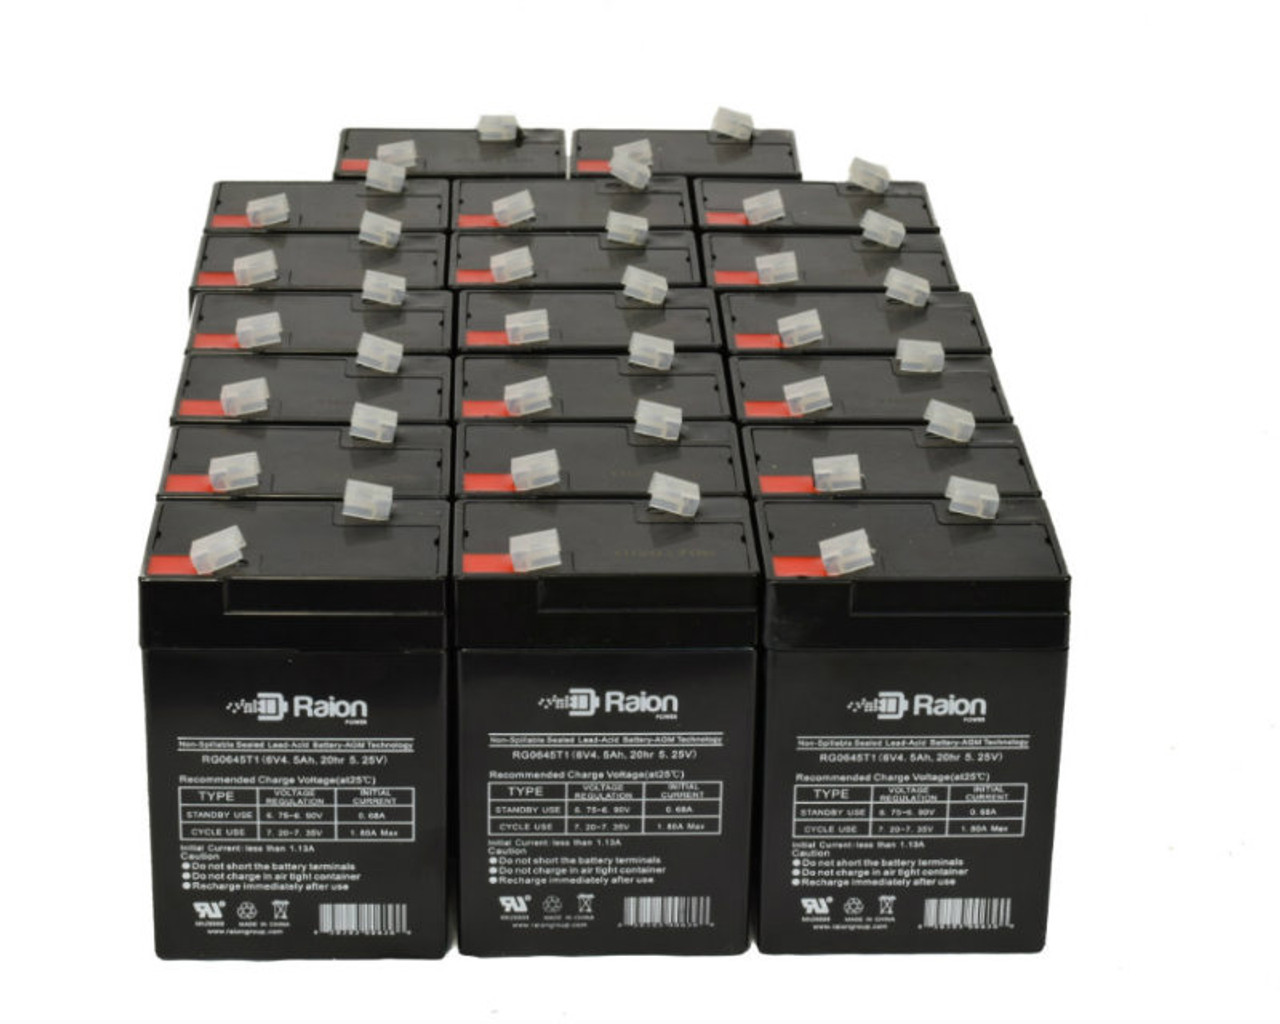 Raion Power 6V 4.5Ah Replacement Emergency Light Battery for Emergi-Lite SMX - 20 Pack